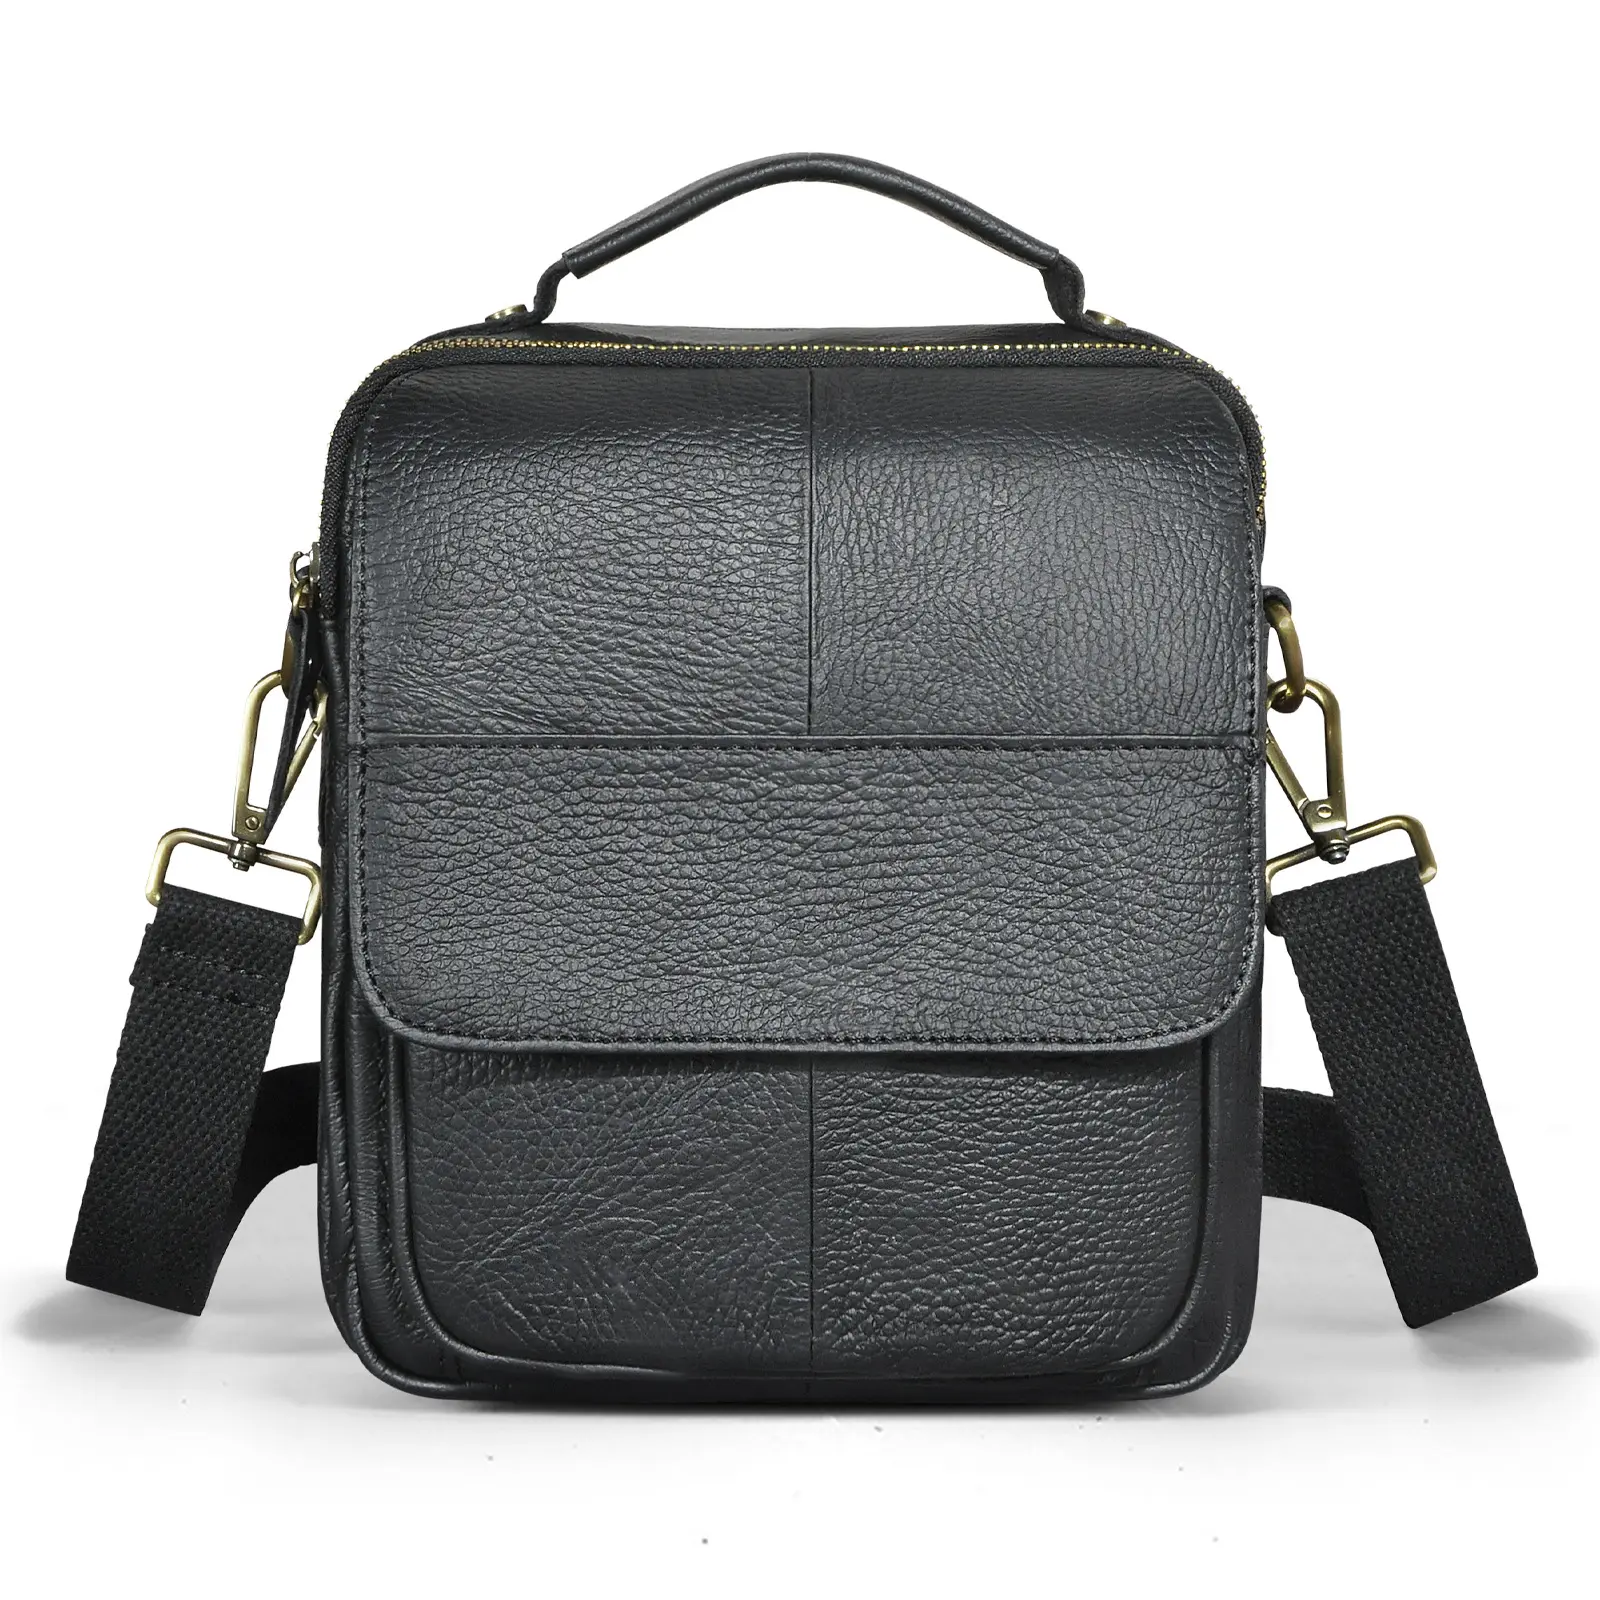 Wholesale dropshipping Tablet Shoulder Messenger Bag Leather Laptop RFID Travel Briefcase Satchel For Office Work School&Travel